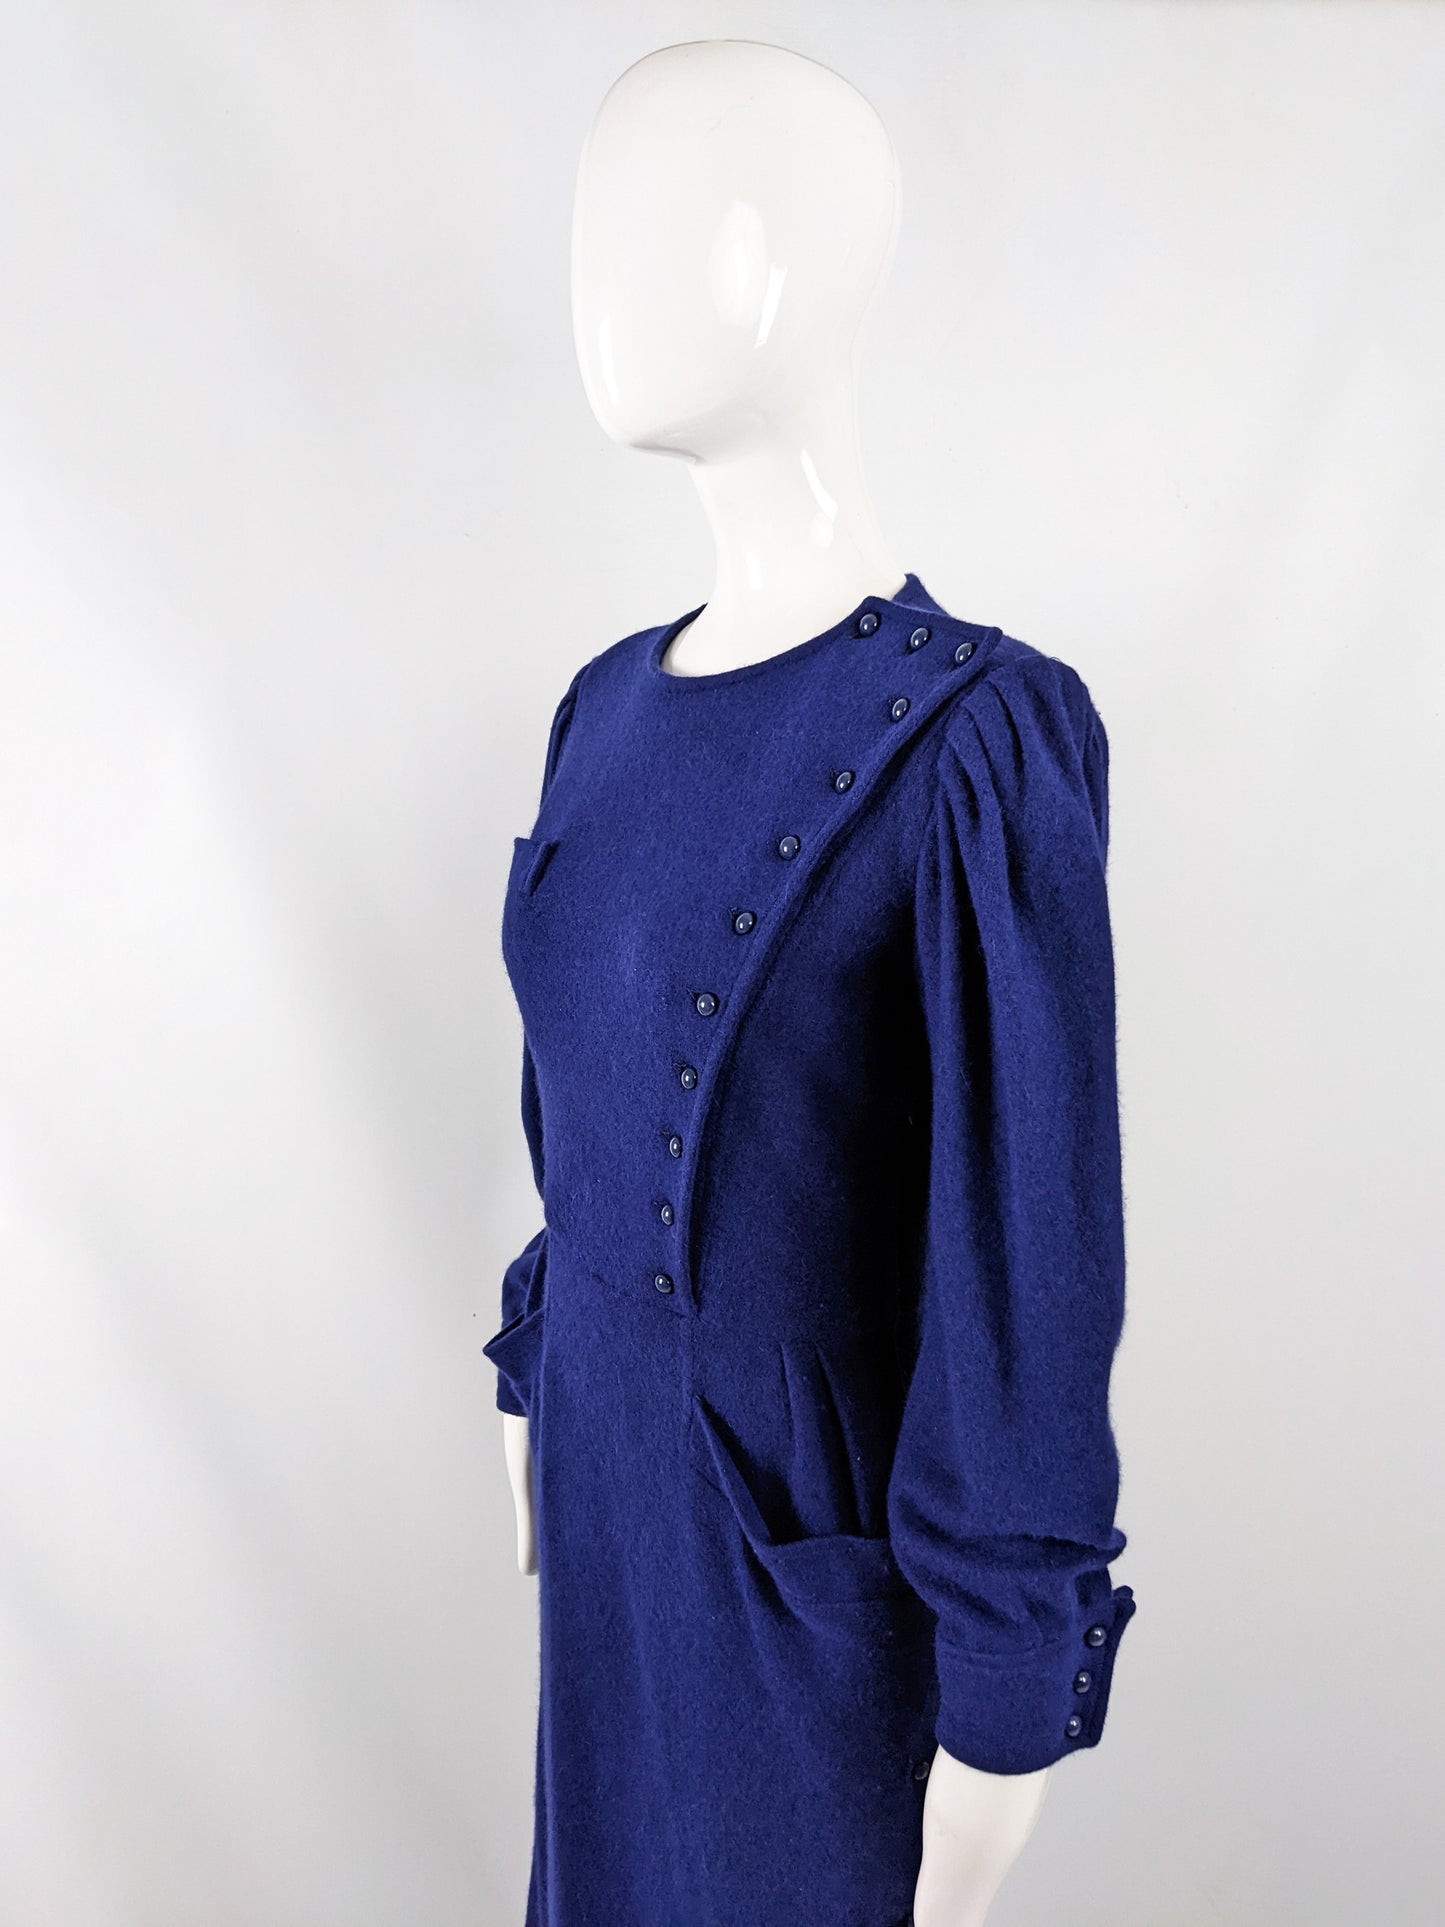 Emanuel Ungaro Vintage 1980s Blue Wool & Angora Dress